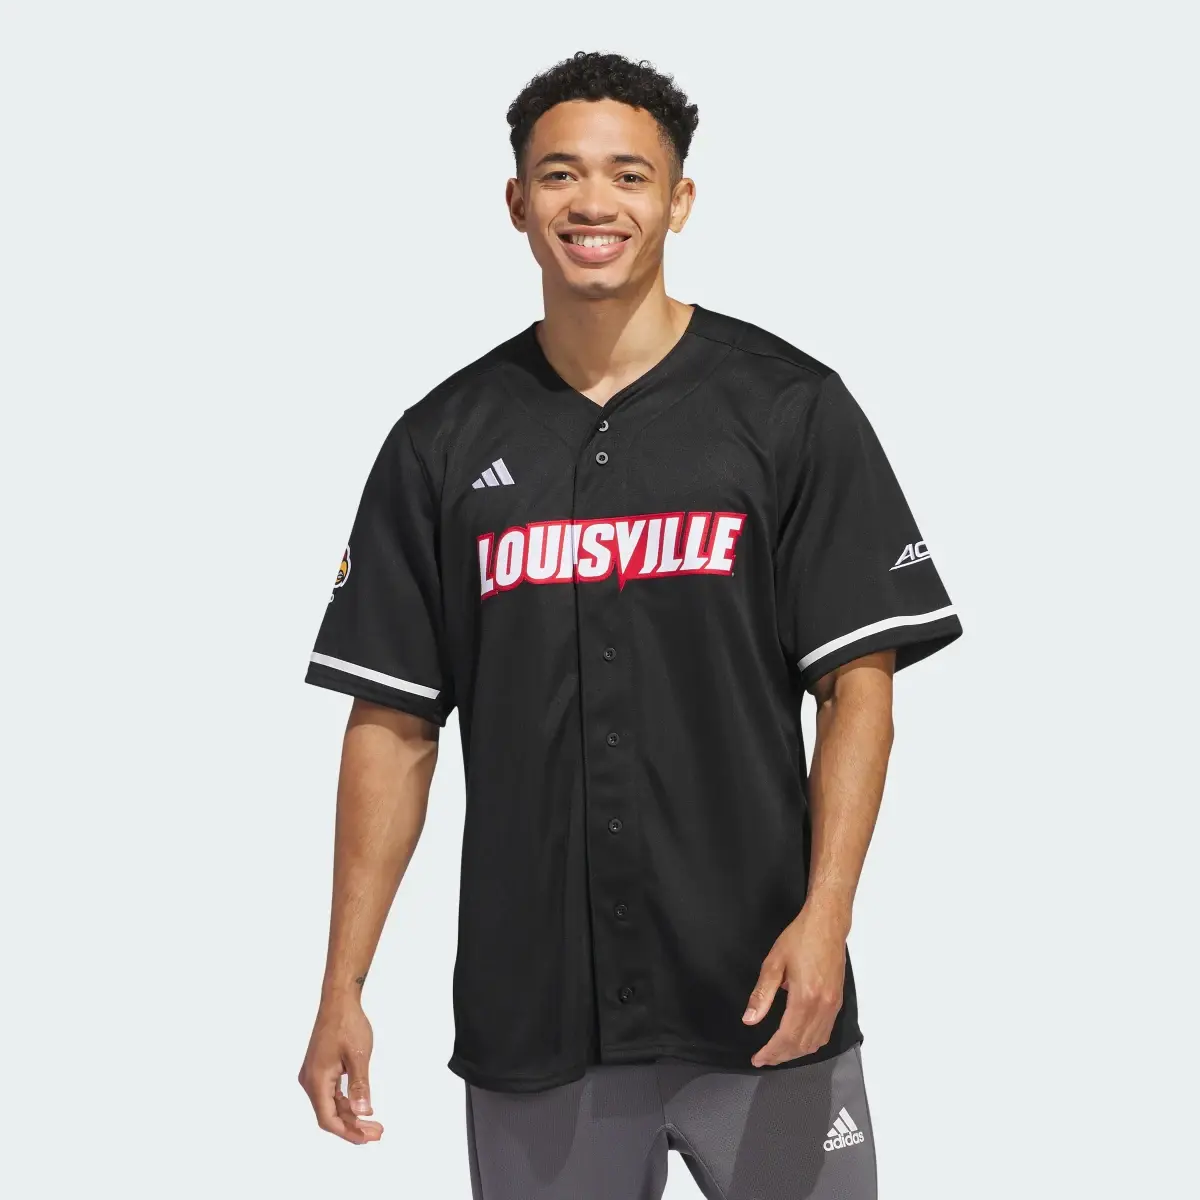 Adidas Louisville Baseball Jersey. 2